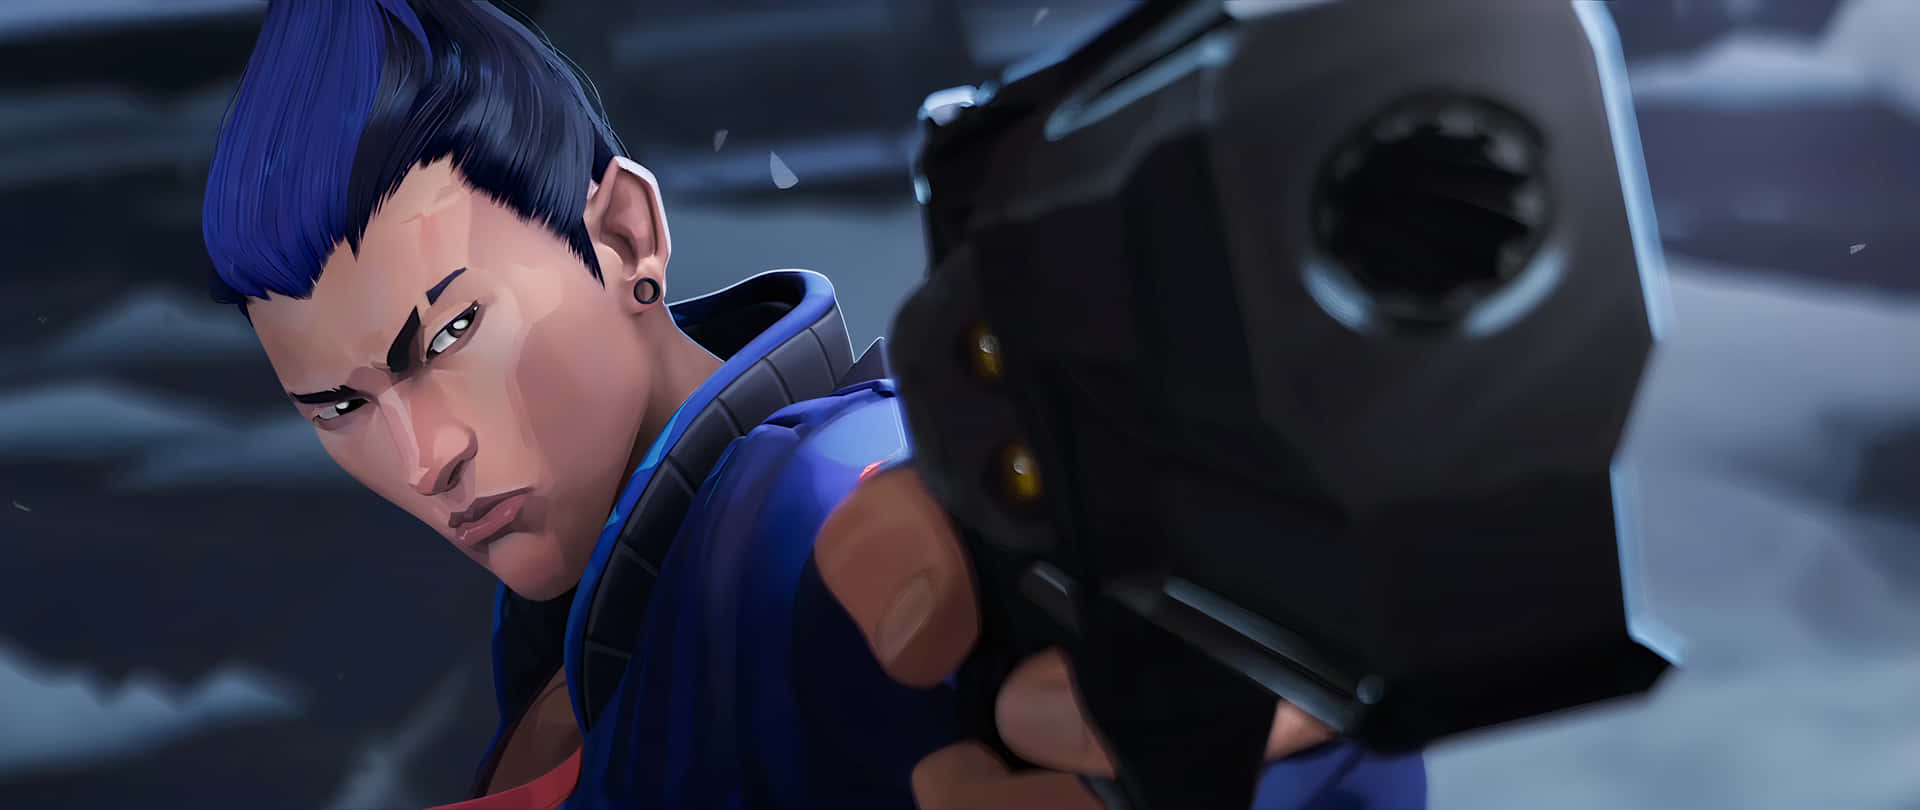 Overwatchun Personaje Con Cabello Azul Sosteniendo Un Arma Fondo de pantalla